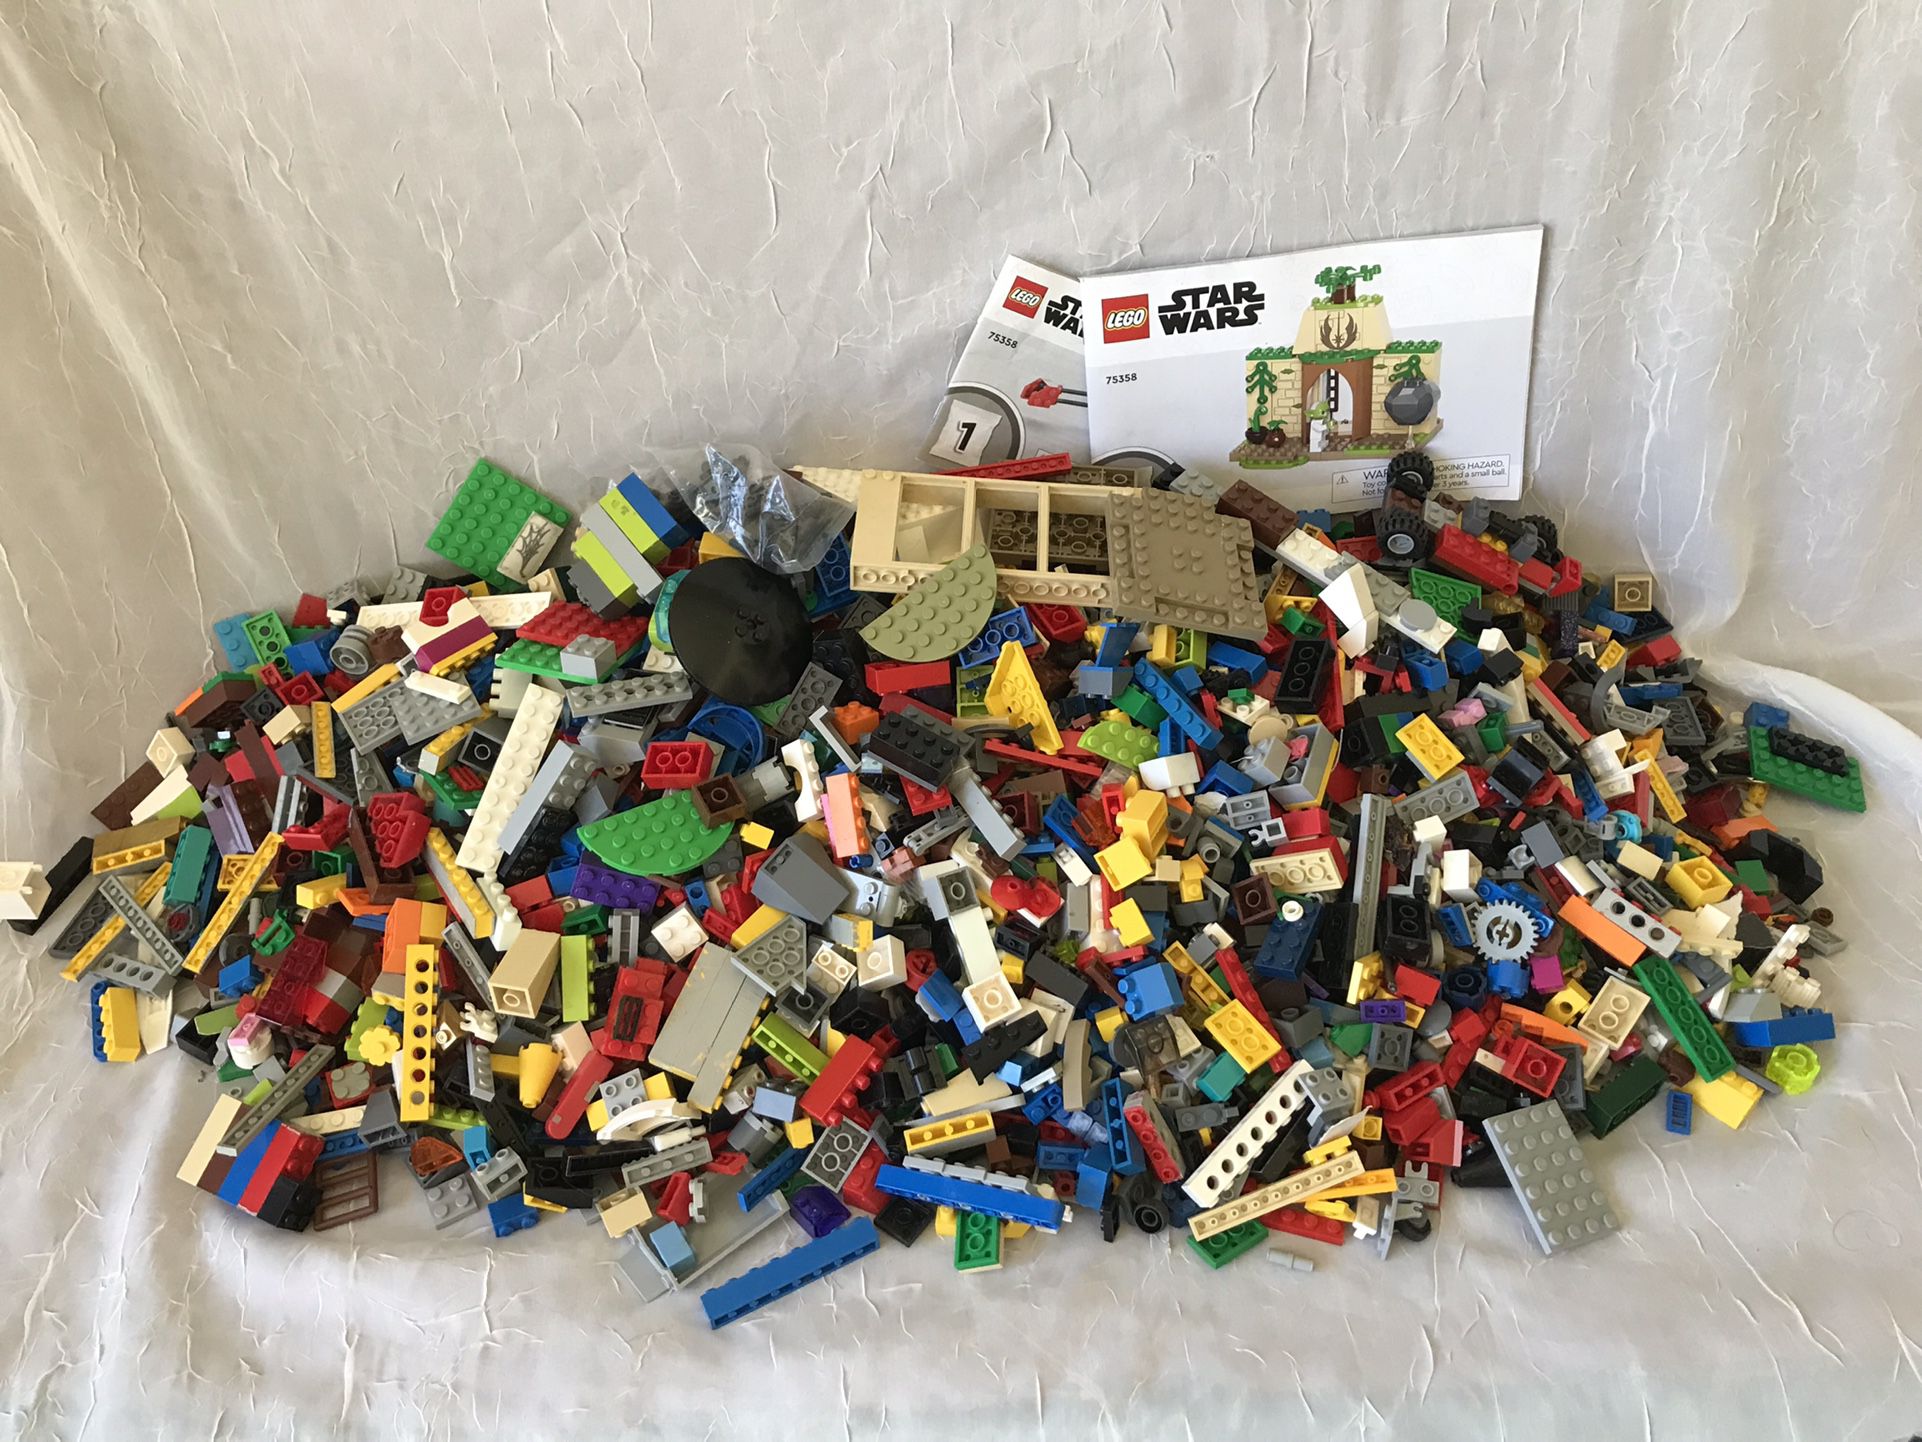 Lego Lot Building Blocks Kids Learning Toys Bricks 10 lbs Pounds LEGOS Star Wars